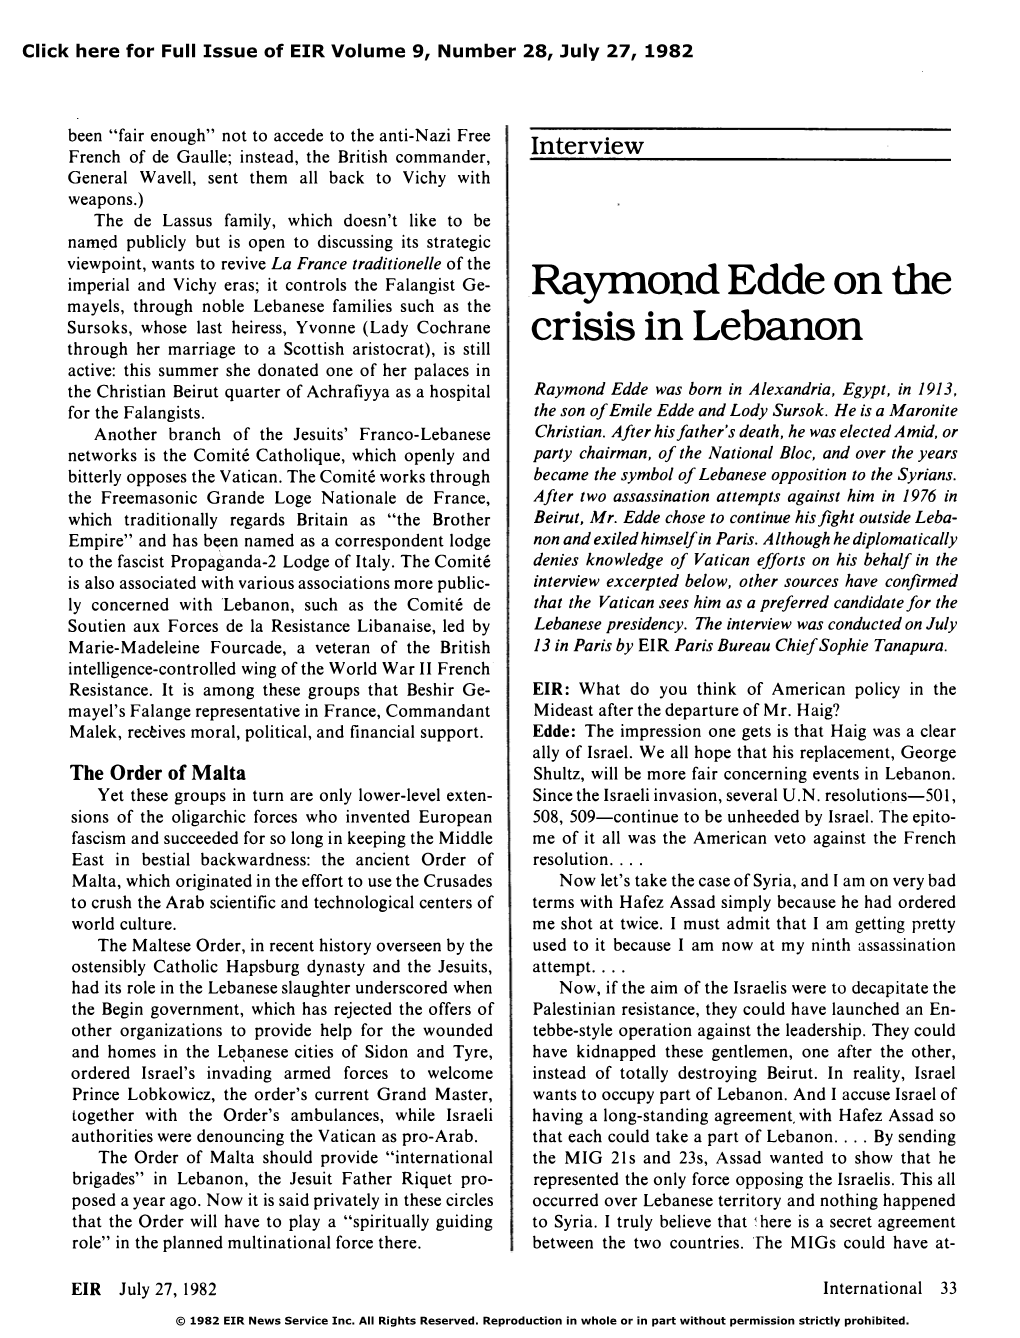 Raymond Edde on the Crisis in Lebanon